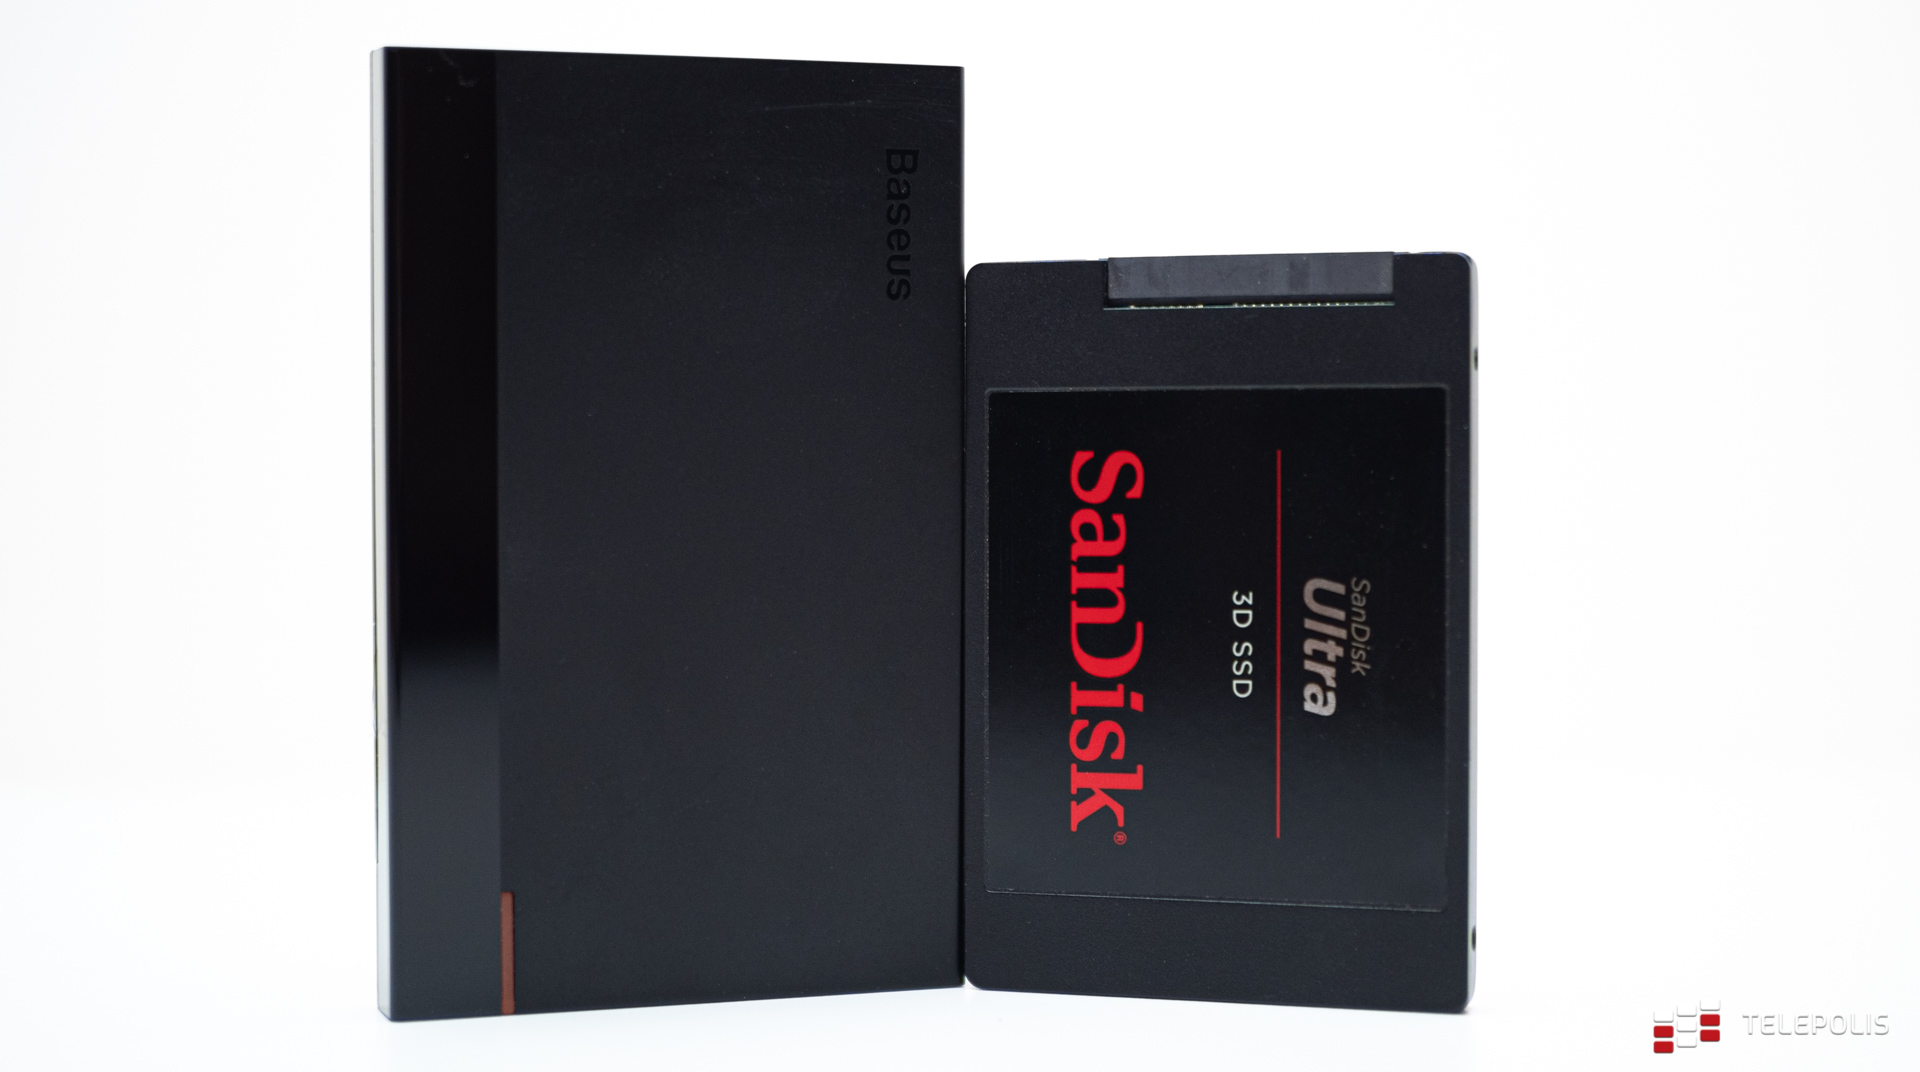 Kieszeń Baseus + SanDisk Ultra 3D SSD 1TB - opinie, test